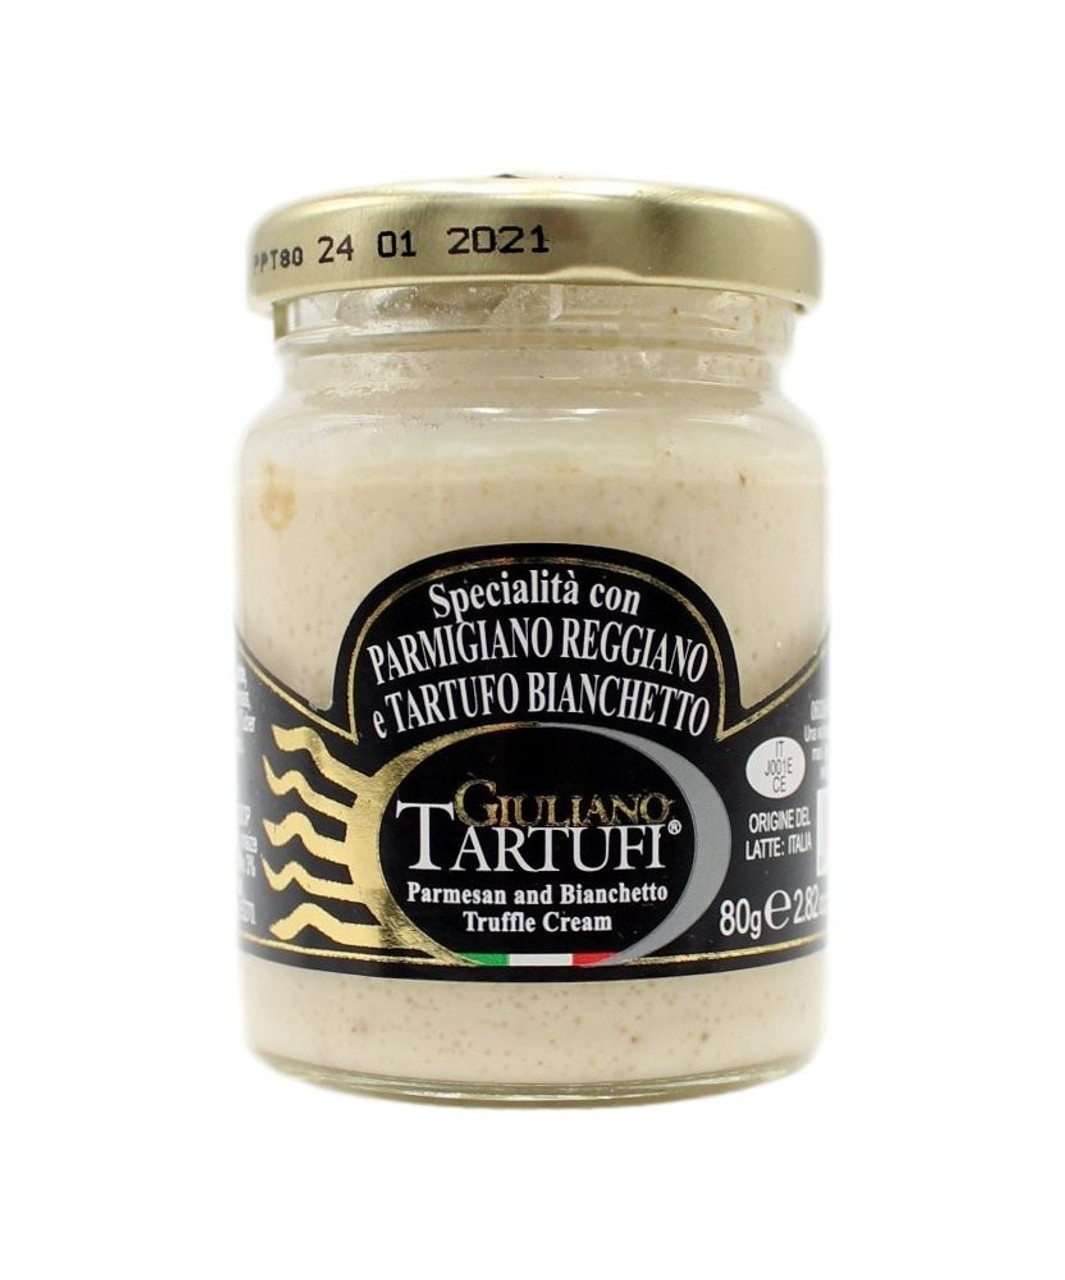 Efterår Dræbte repertoire Shop Parmesan and Bianchetto Truffle Cream by Giuliano Tartufi online |  Parmesan and truffle sauce | truffle sauce for pasta